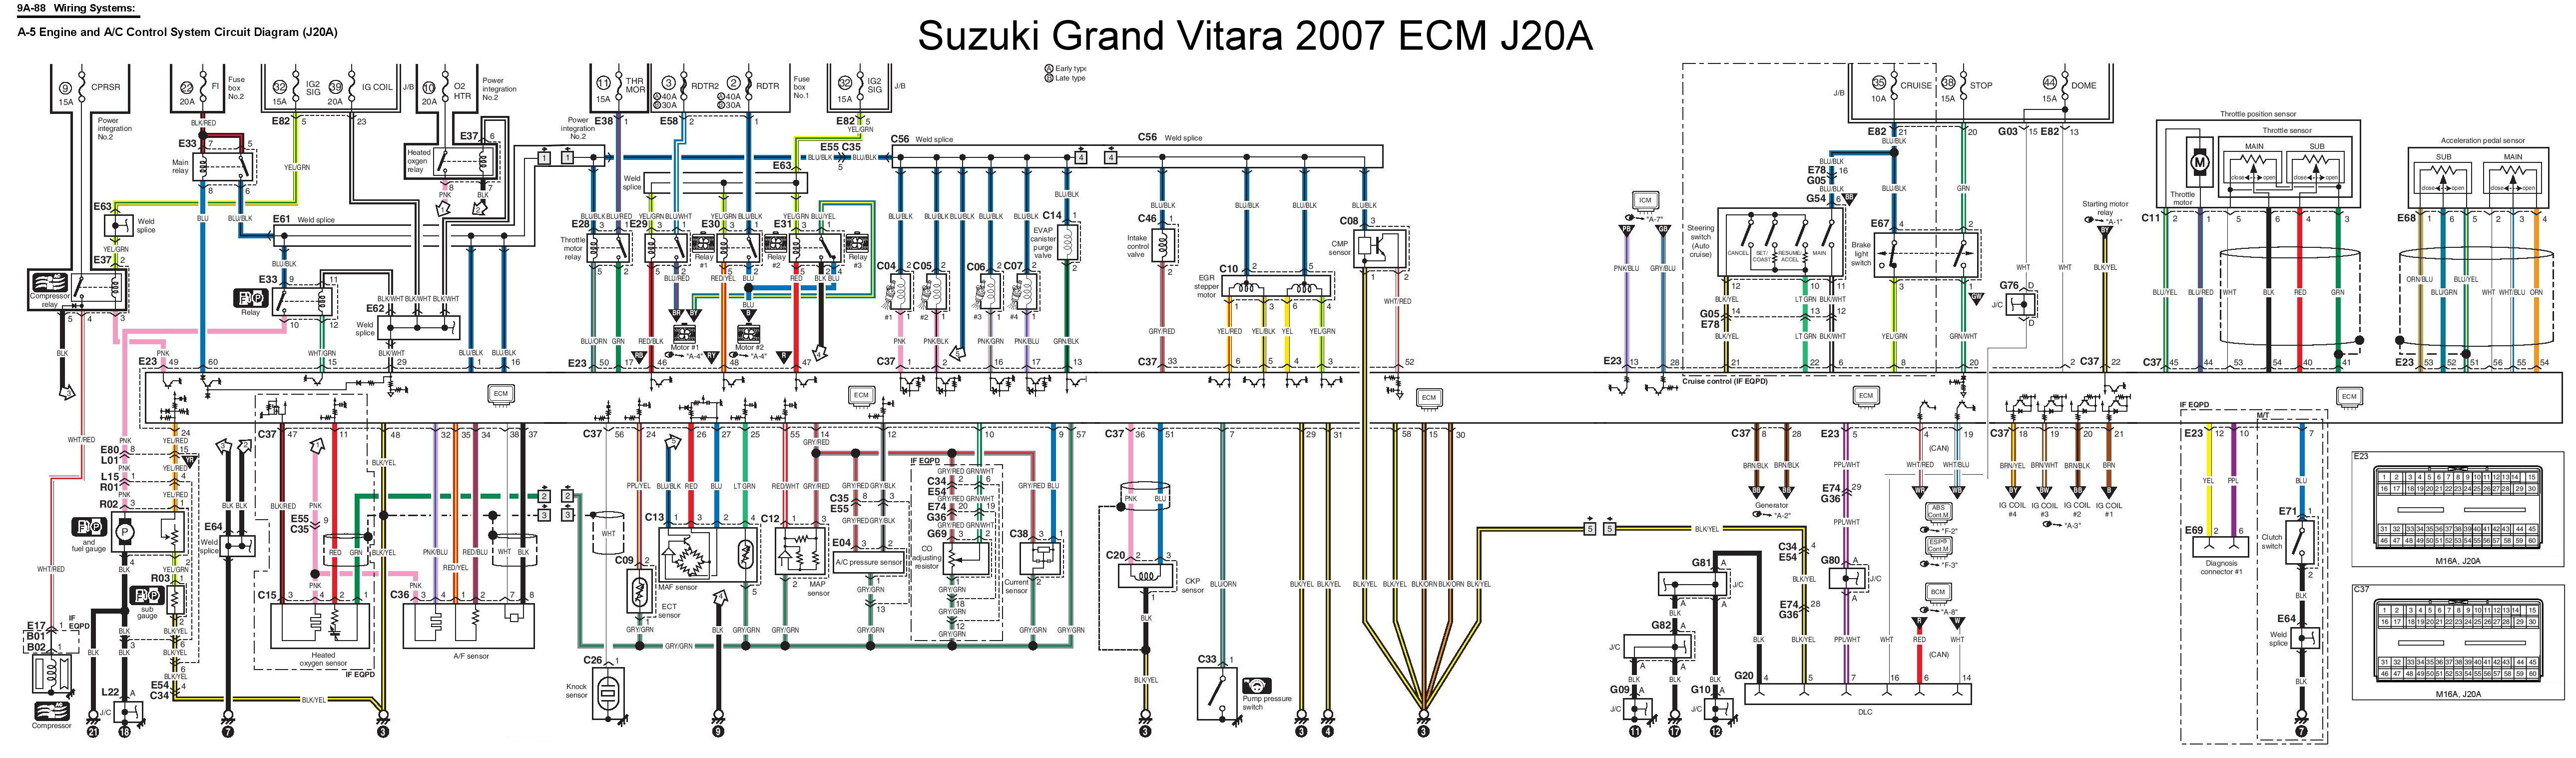 2002 Suzuki Grand Vitara Wiring Diagram from www.valvulita.com